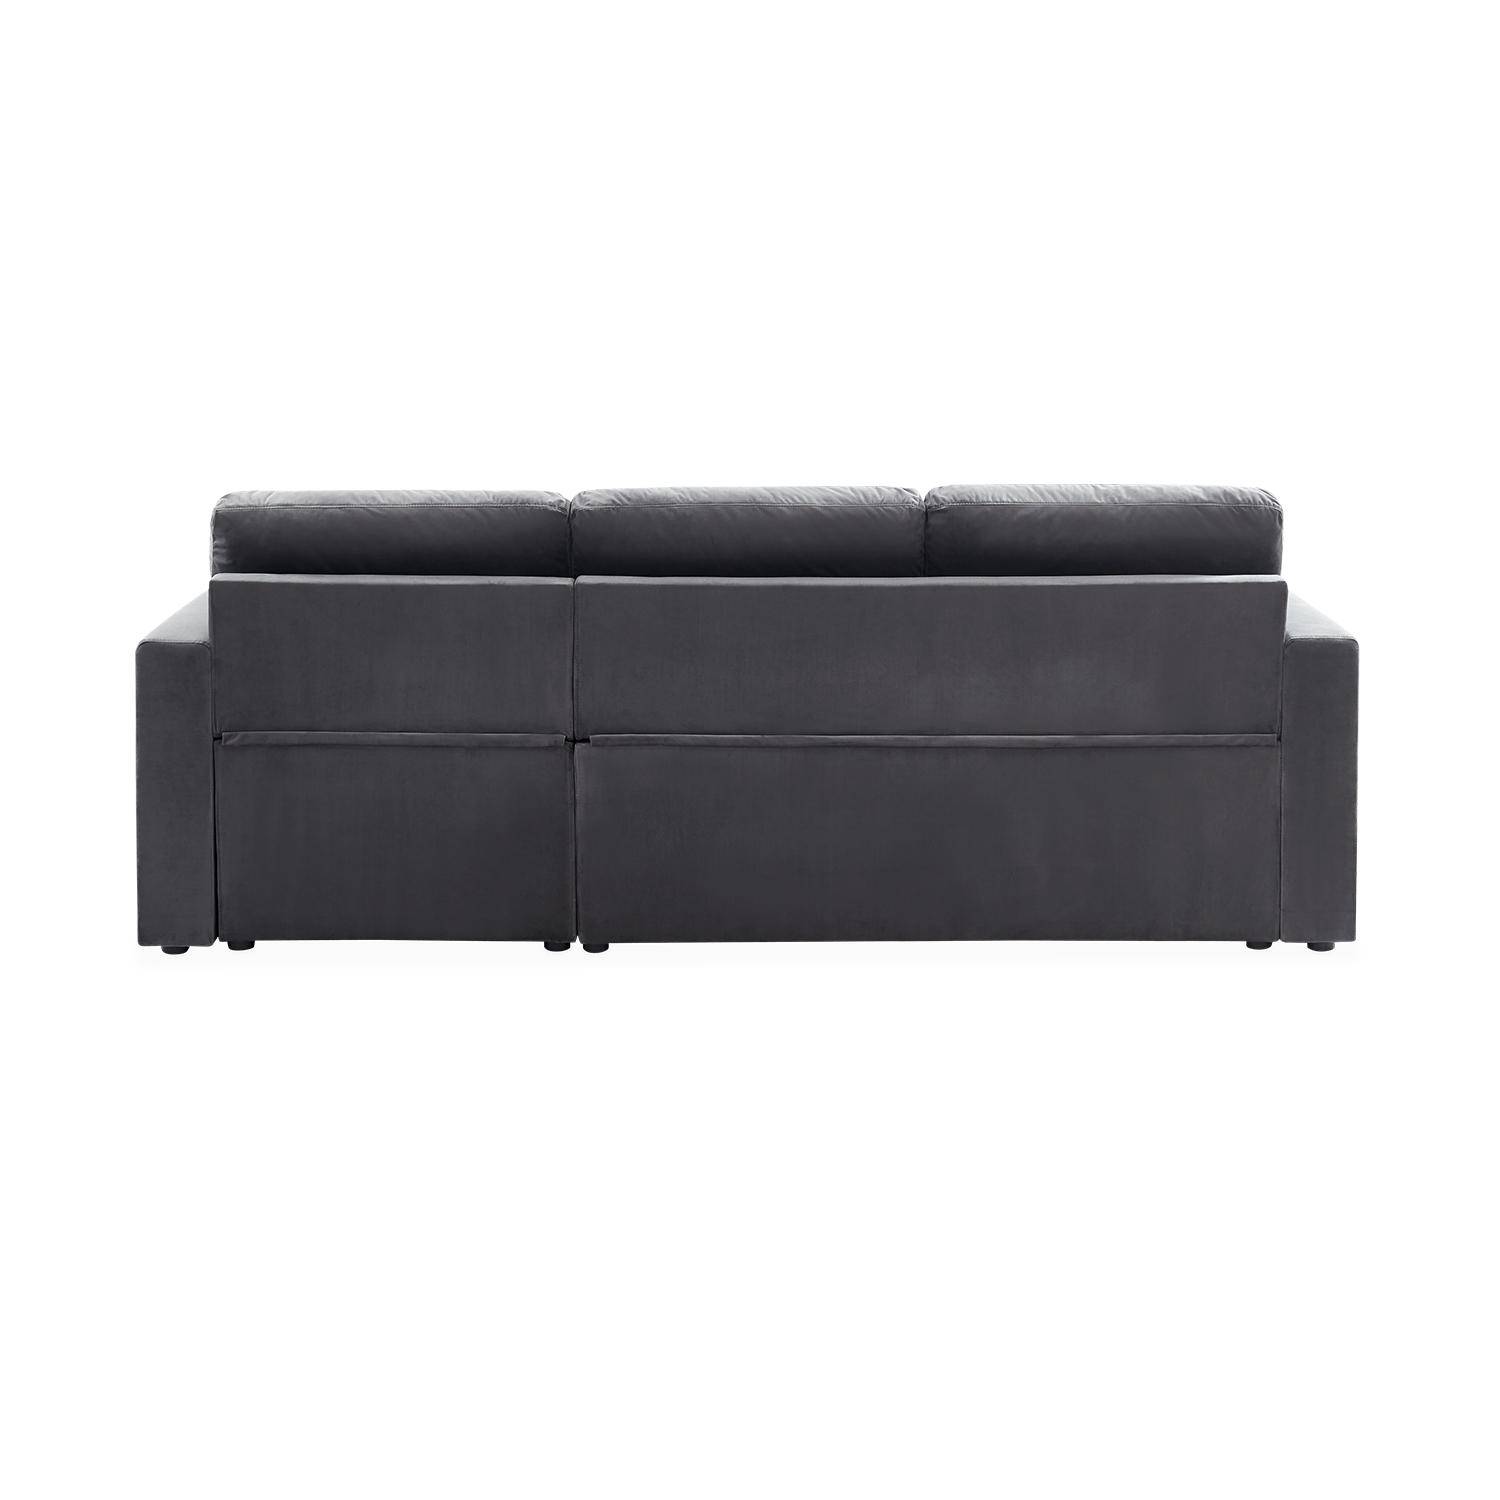 Dark grey velvet 3-seater convertible corner sofa, reversible corner armchair, storage box, modular bed,sweeek,Photo7